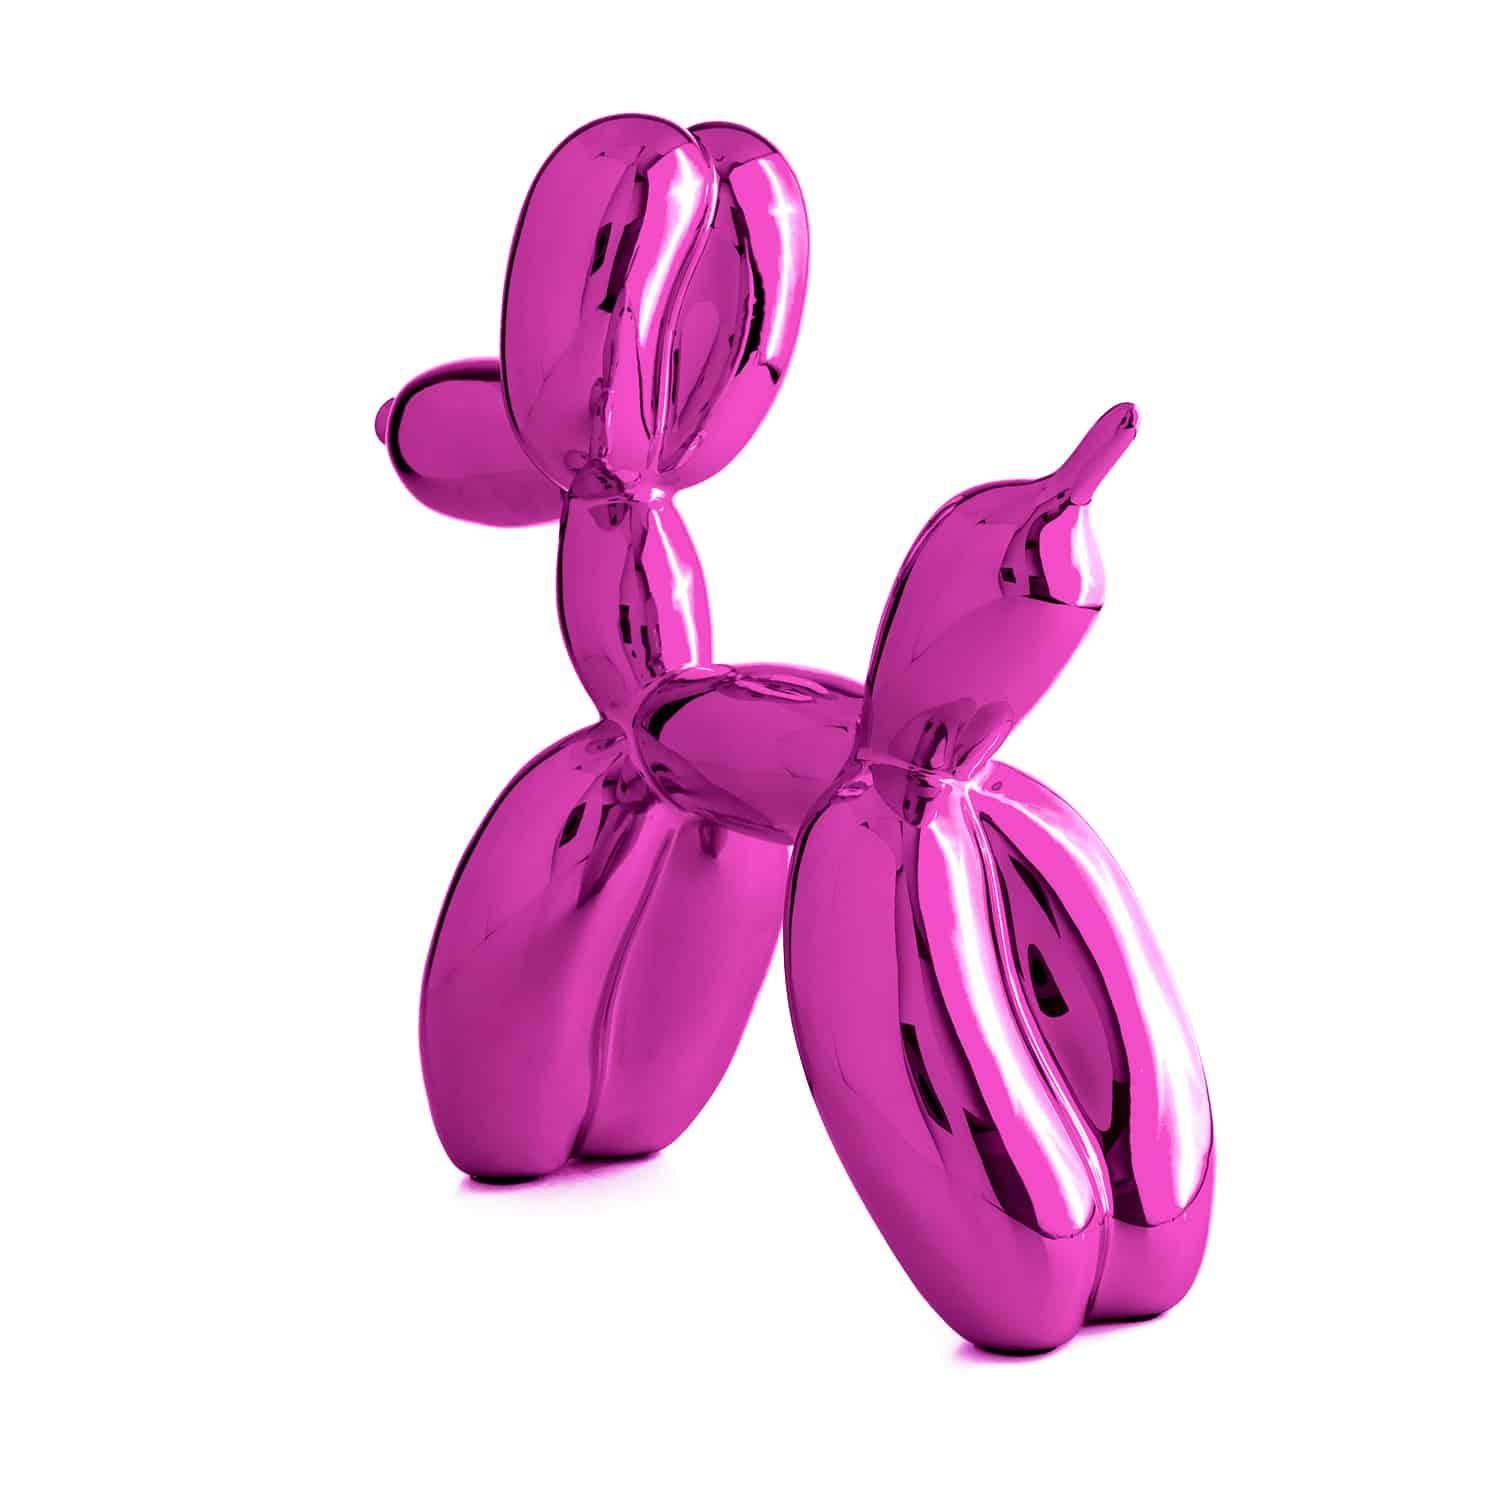 jeff koons pink balloon dog